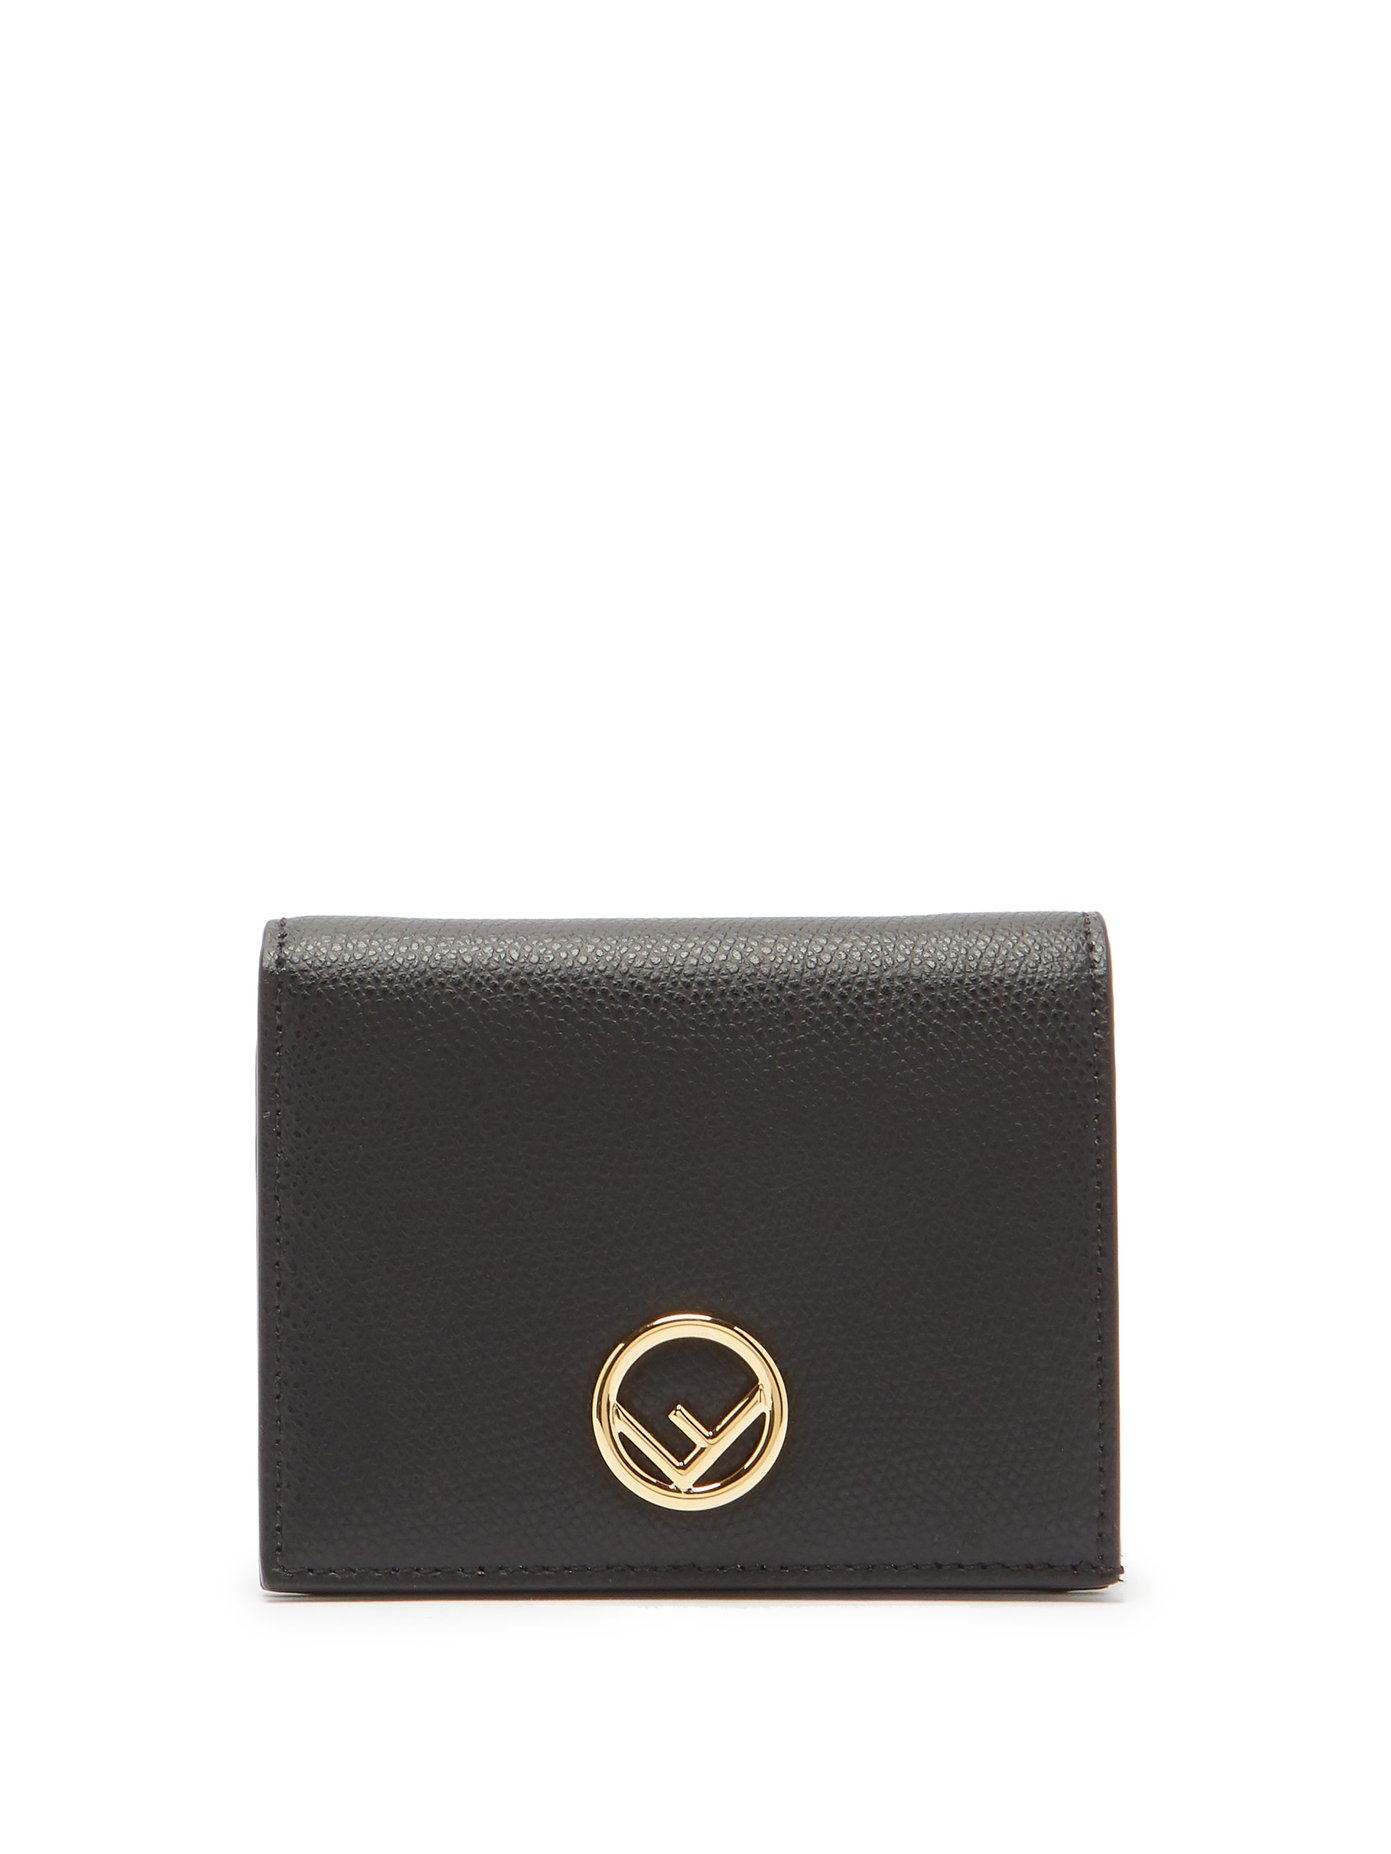 F is Fendi grained-leather wallet 